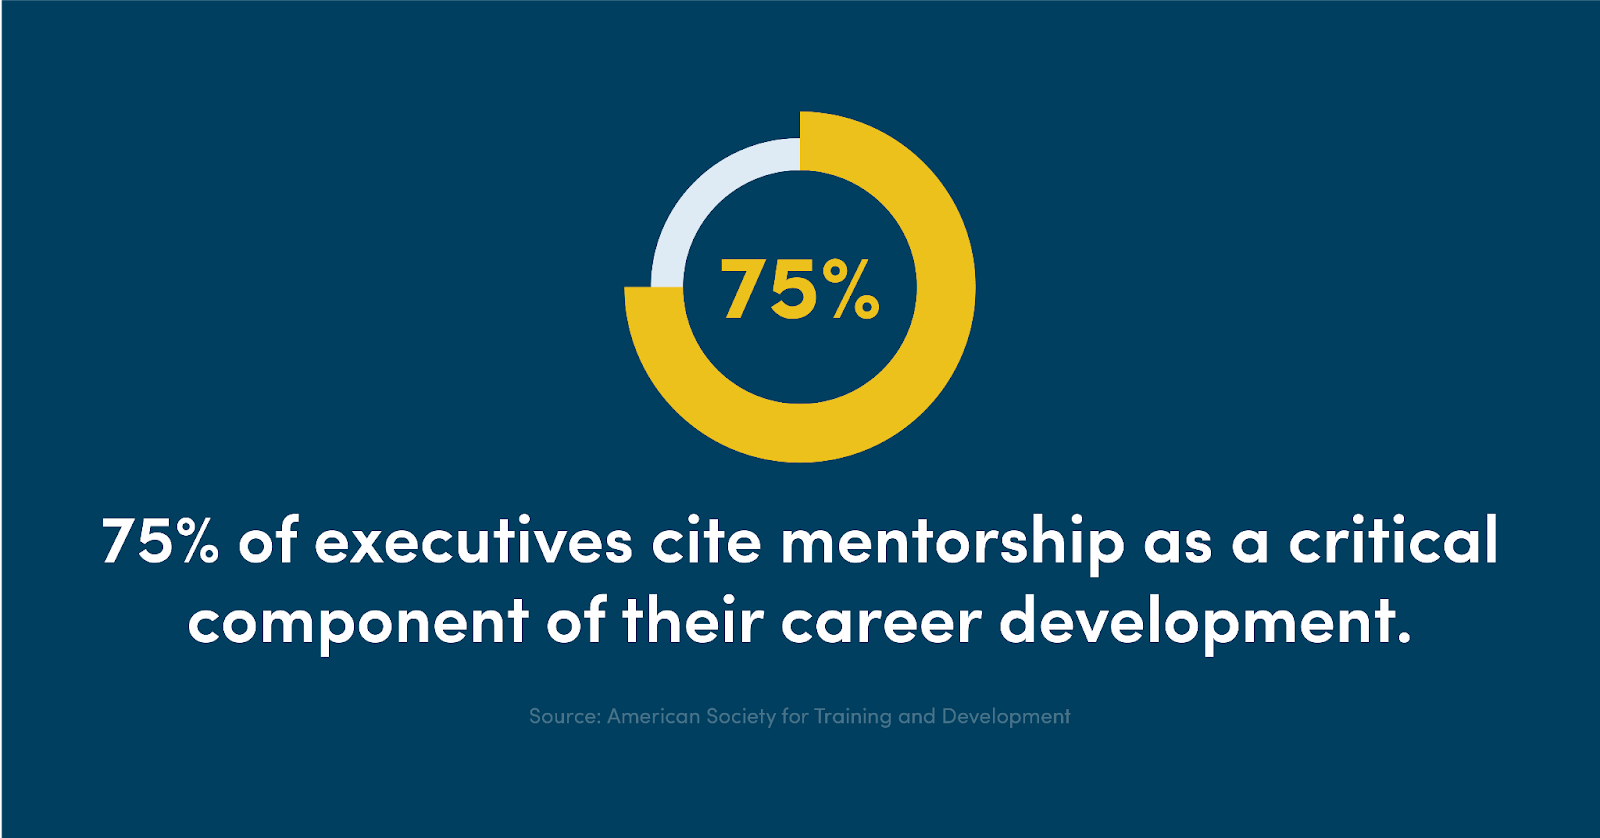 75% of executives cite mentorship as a critical component of their career development.